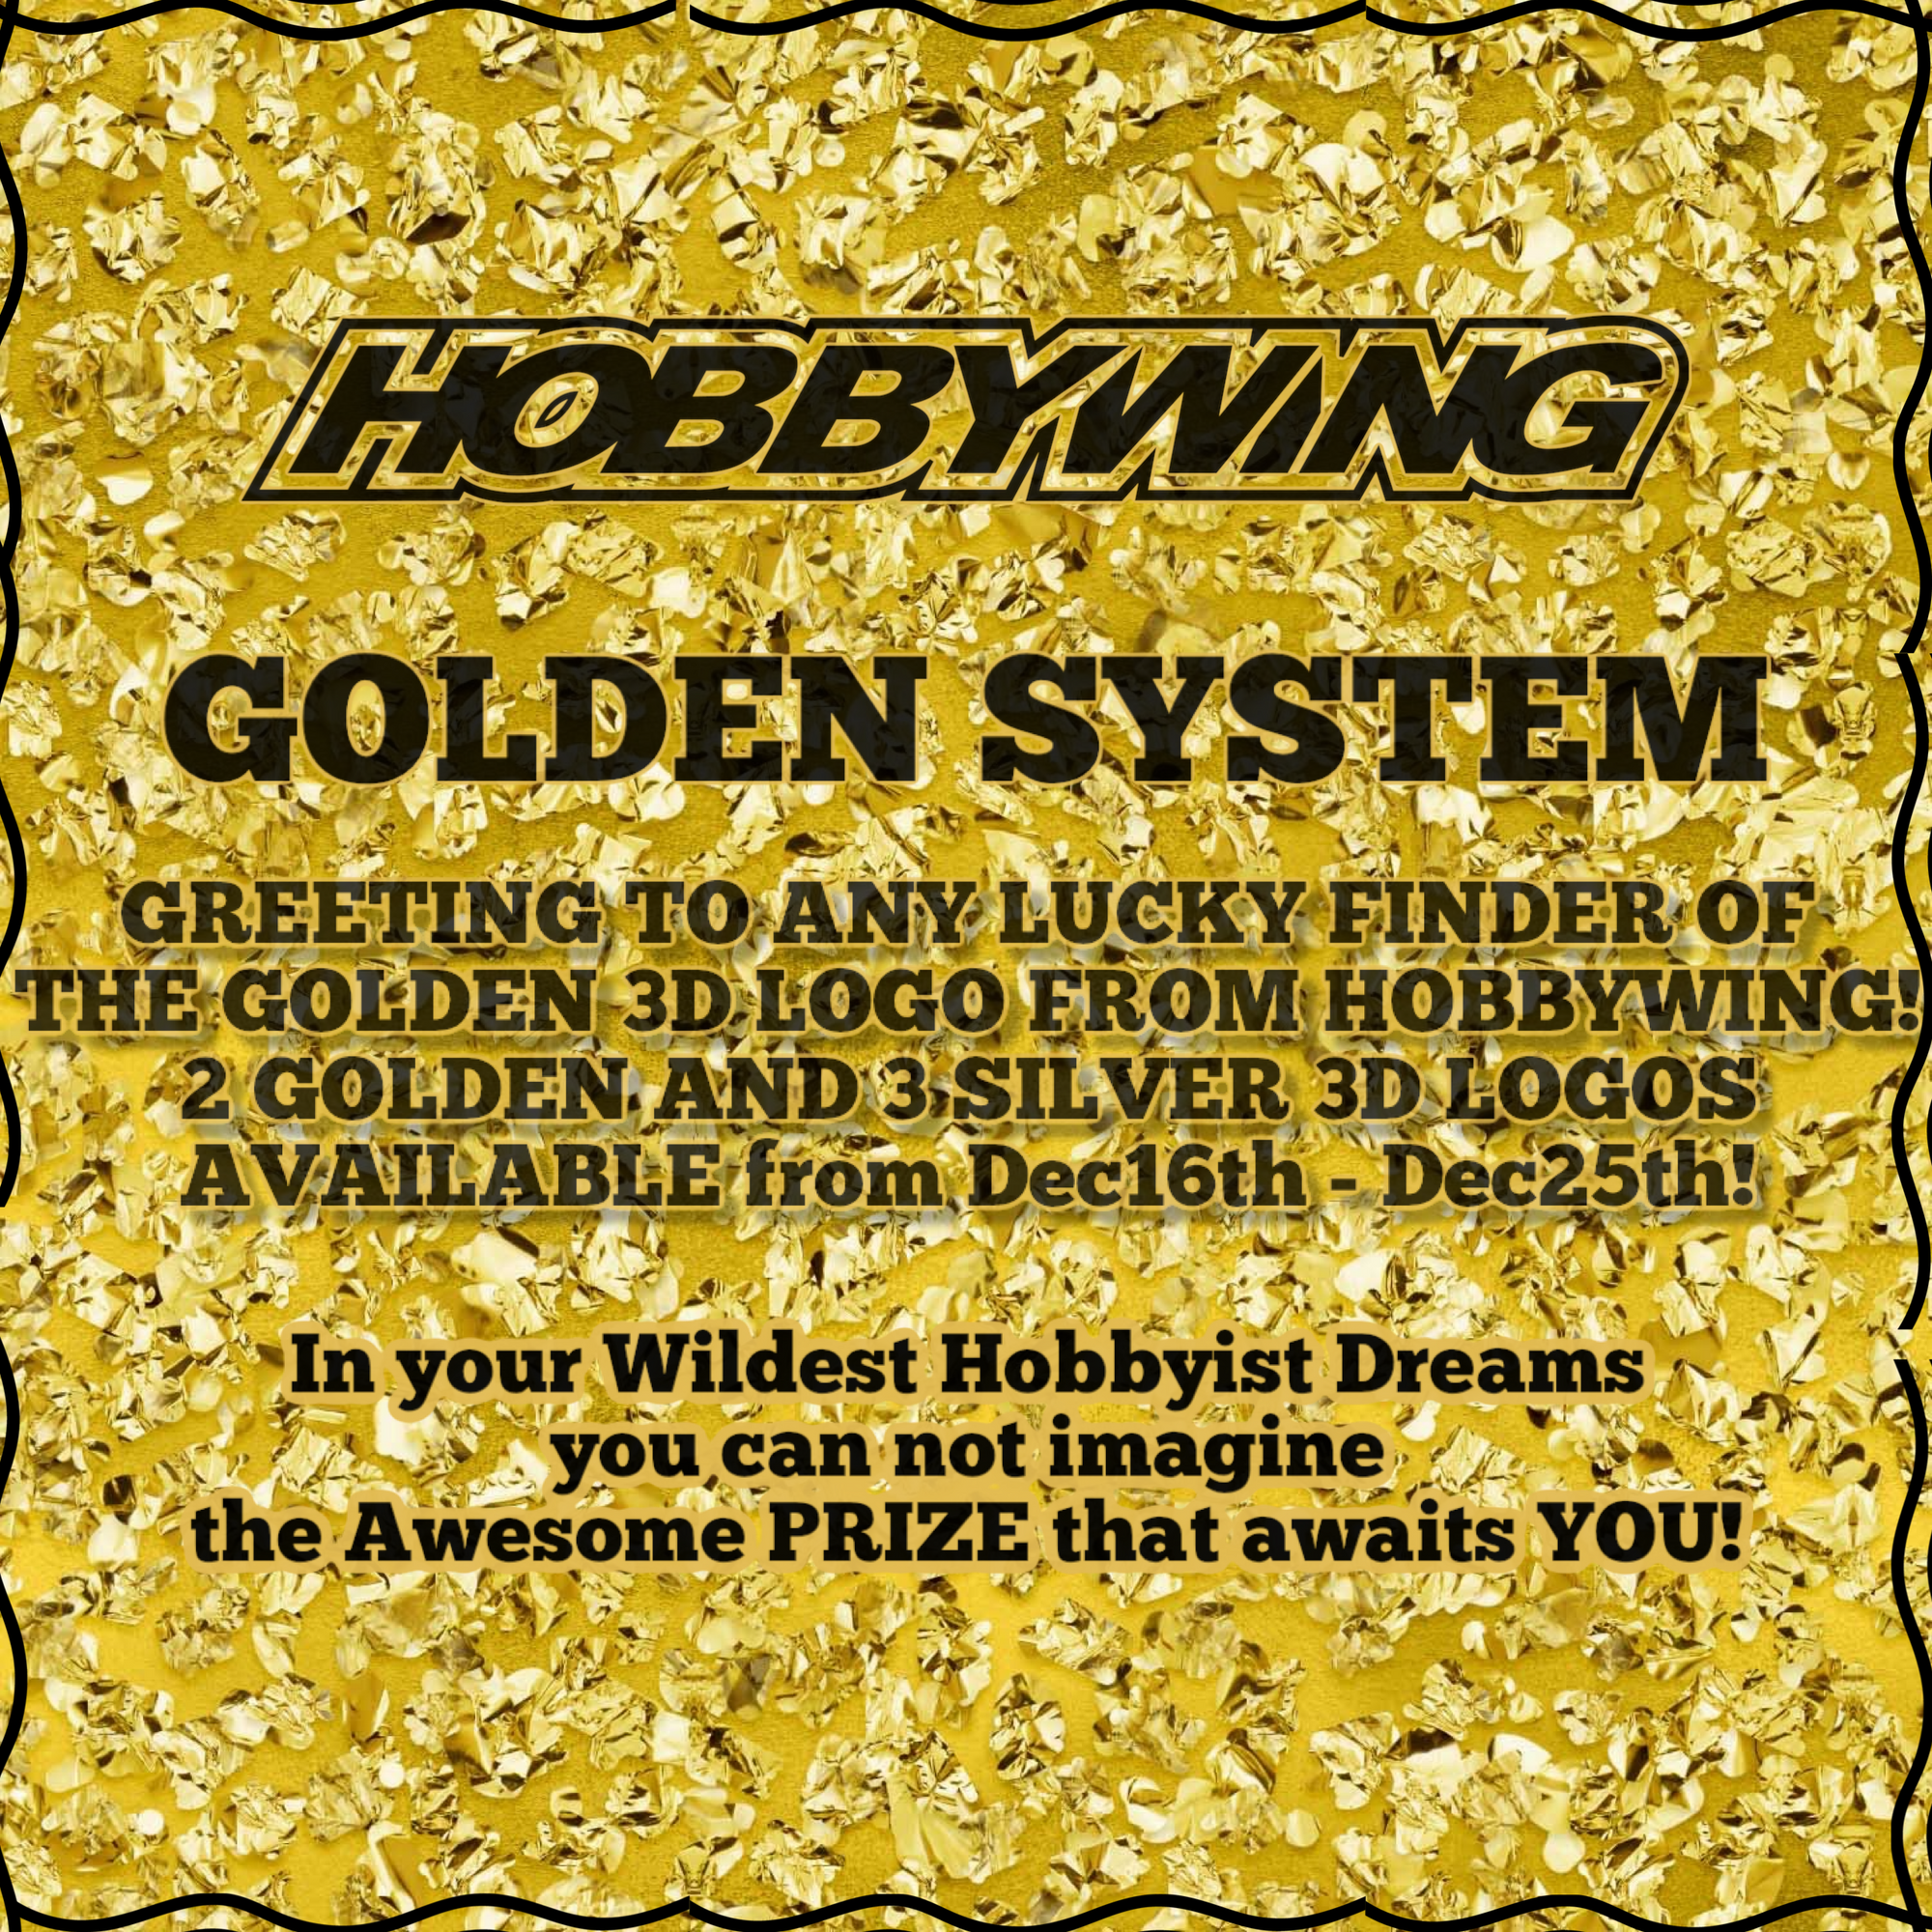 HOBBYWING's Golden System